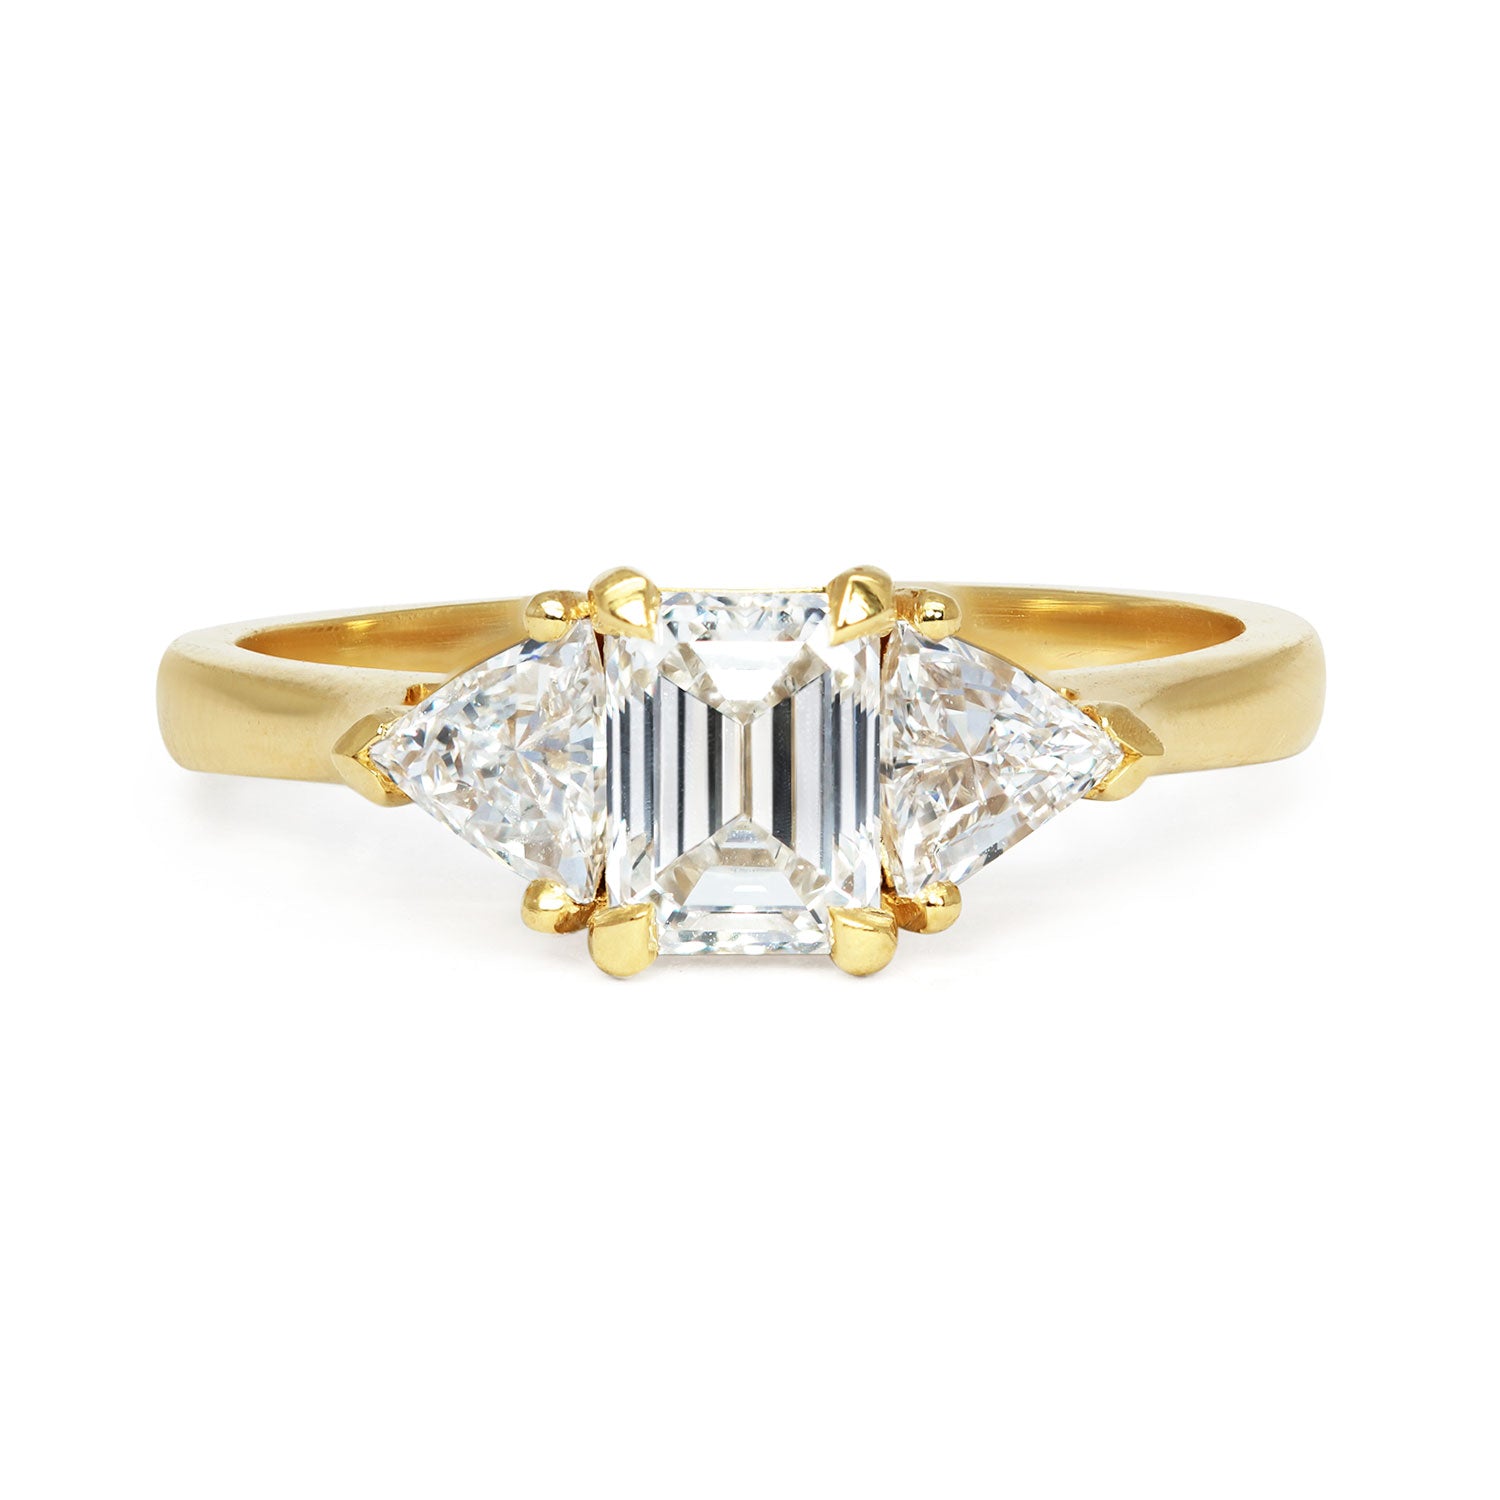 Bespoke Steve trilogy engagement ring, 18ct yellow Fairmined Ecological Gold, 0.7ct Canadamark emerald-cut diamond and trillion-cut artisanal Ocean Diamonds